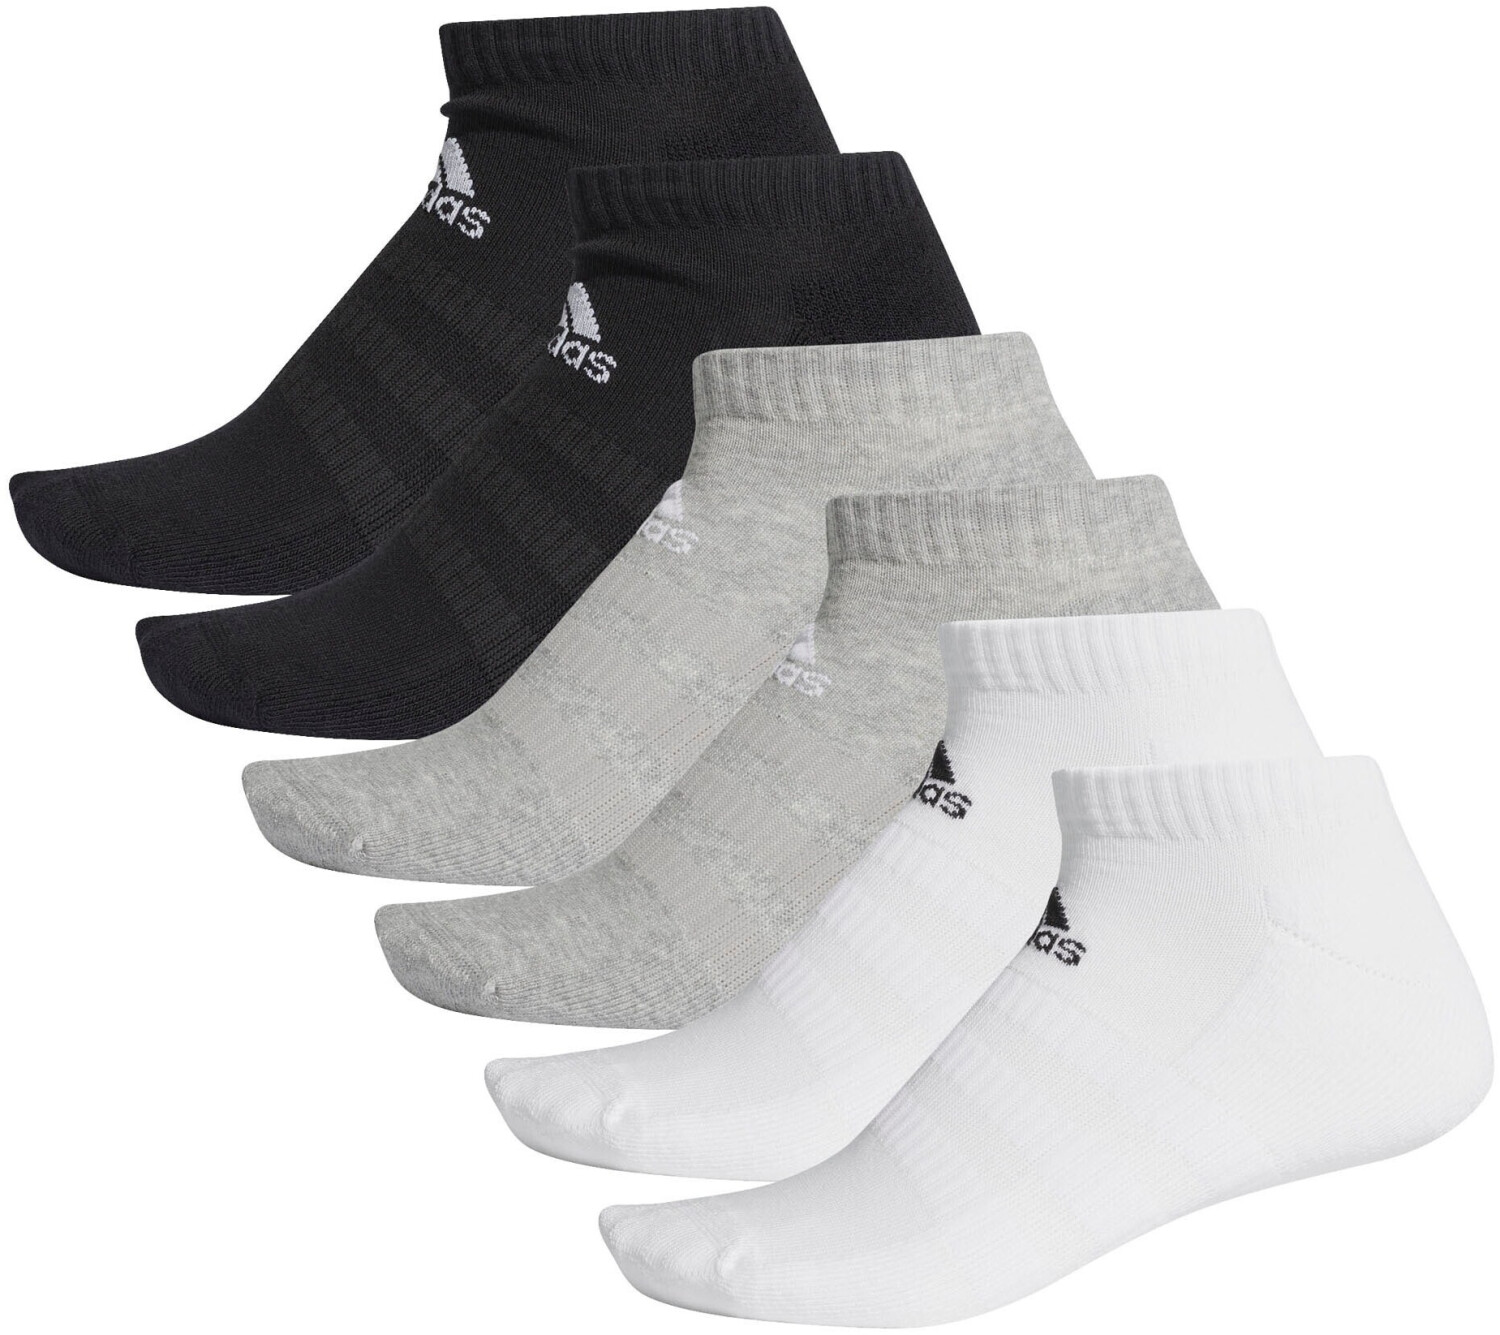 Adidas Cushioned Low-Cut Socks 6-Pack grey/black/white ab 14,85 € |  Preisvergleich bei